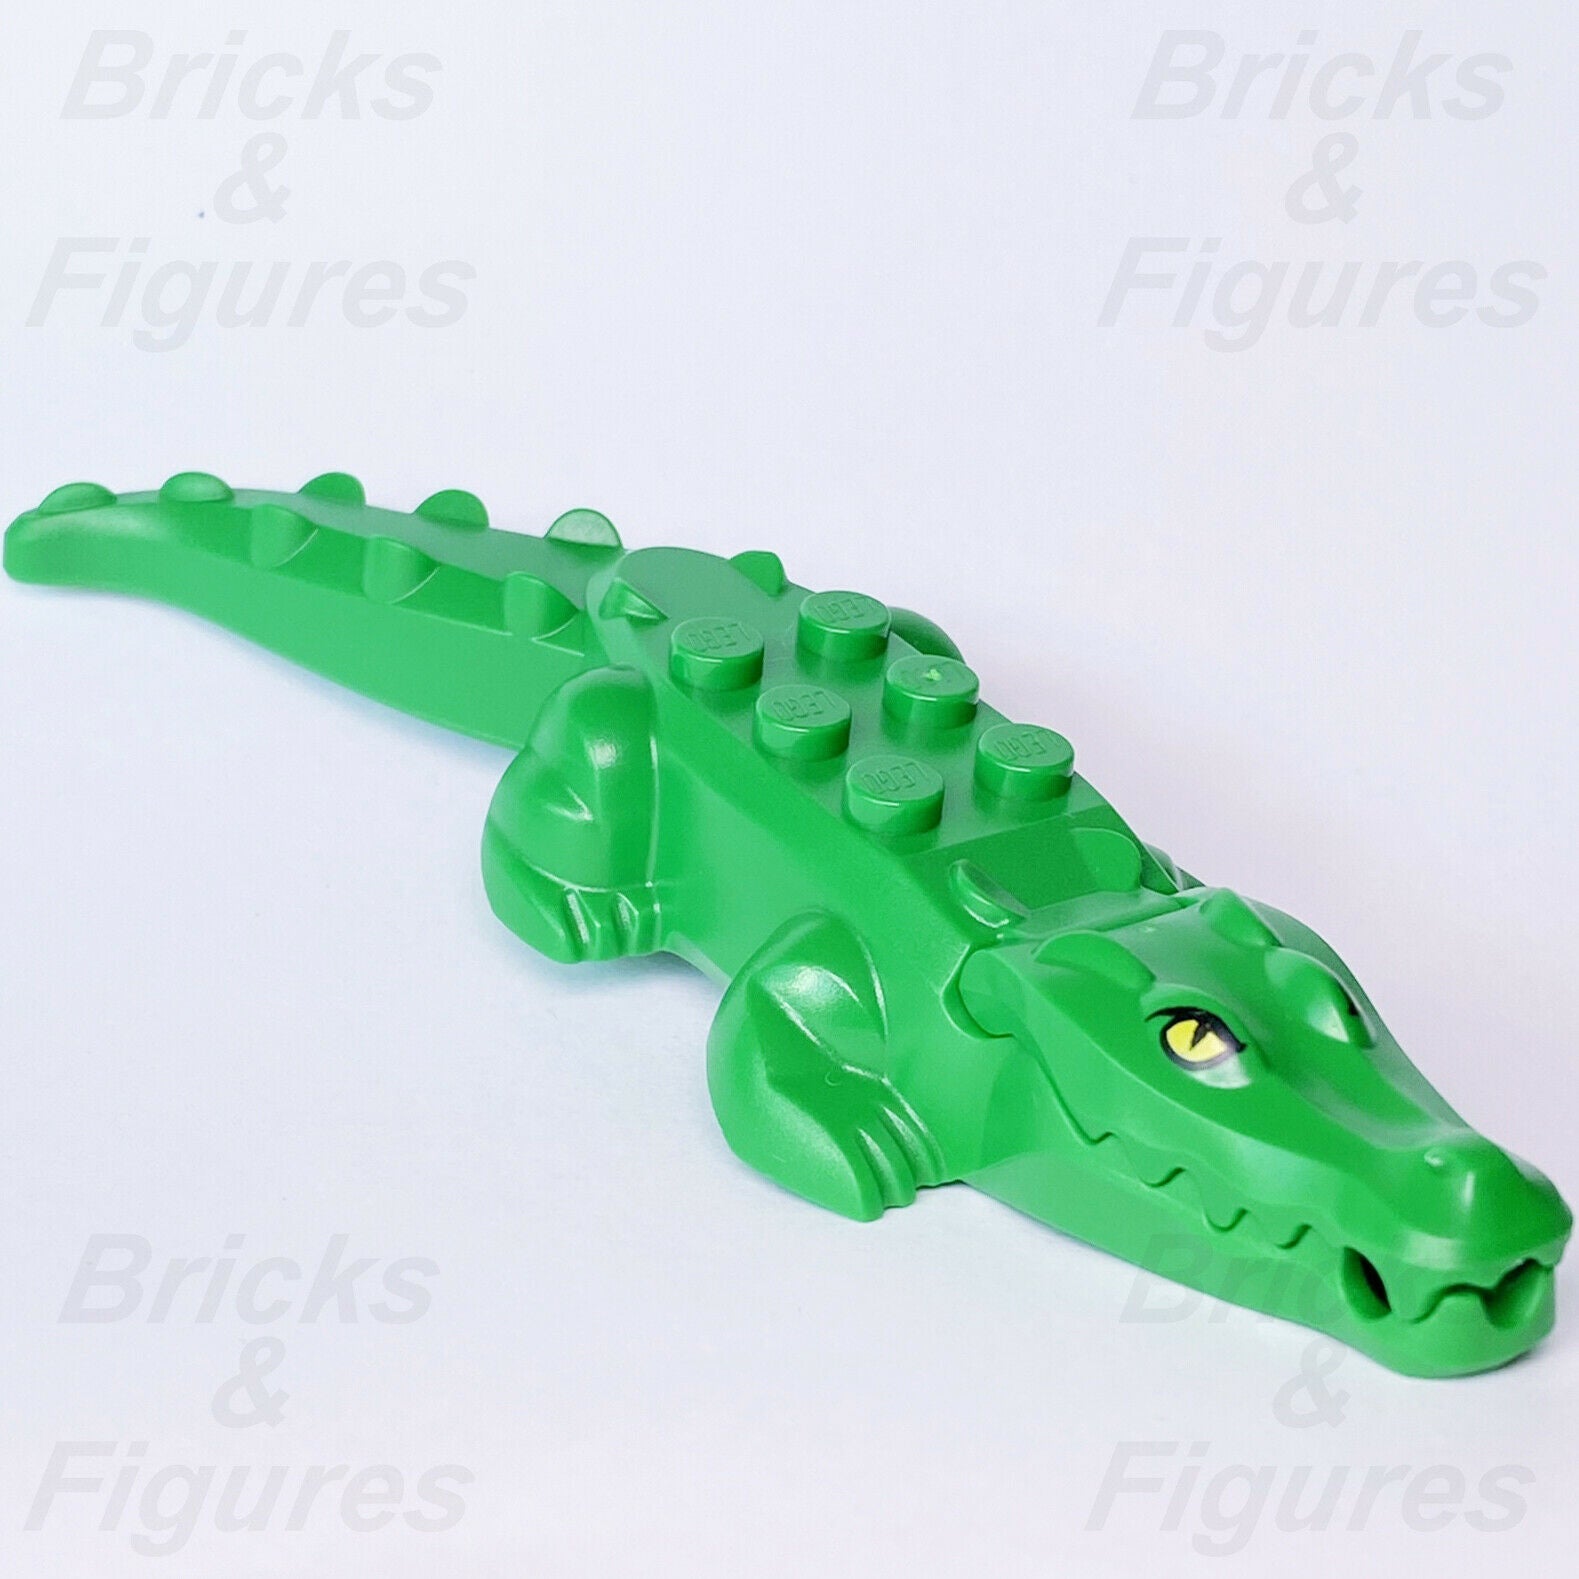 LEGO Town City Alligator Green Wildlife Rescue Crocodile Minifigure Part 60302 - Bricks & Figures